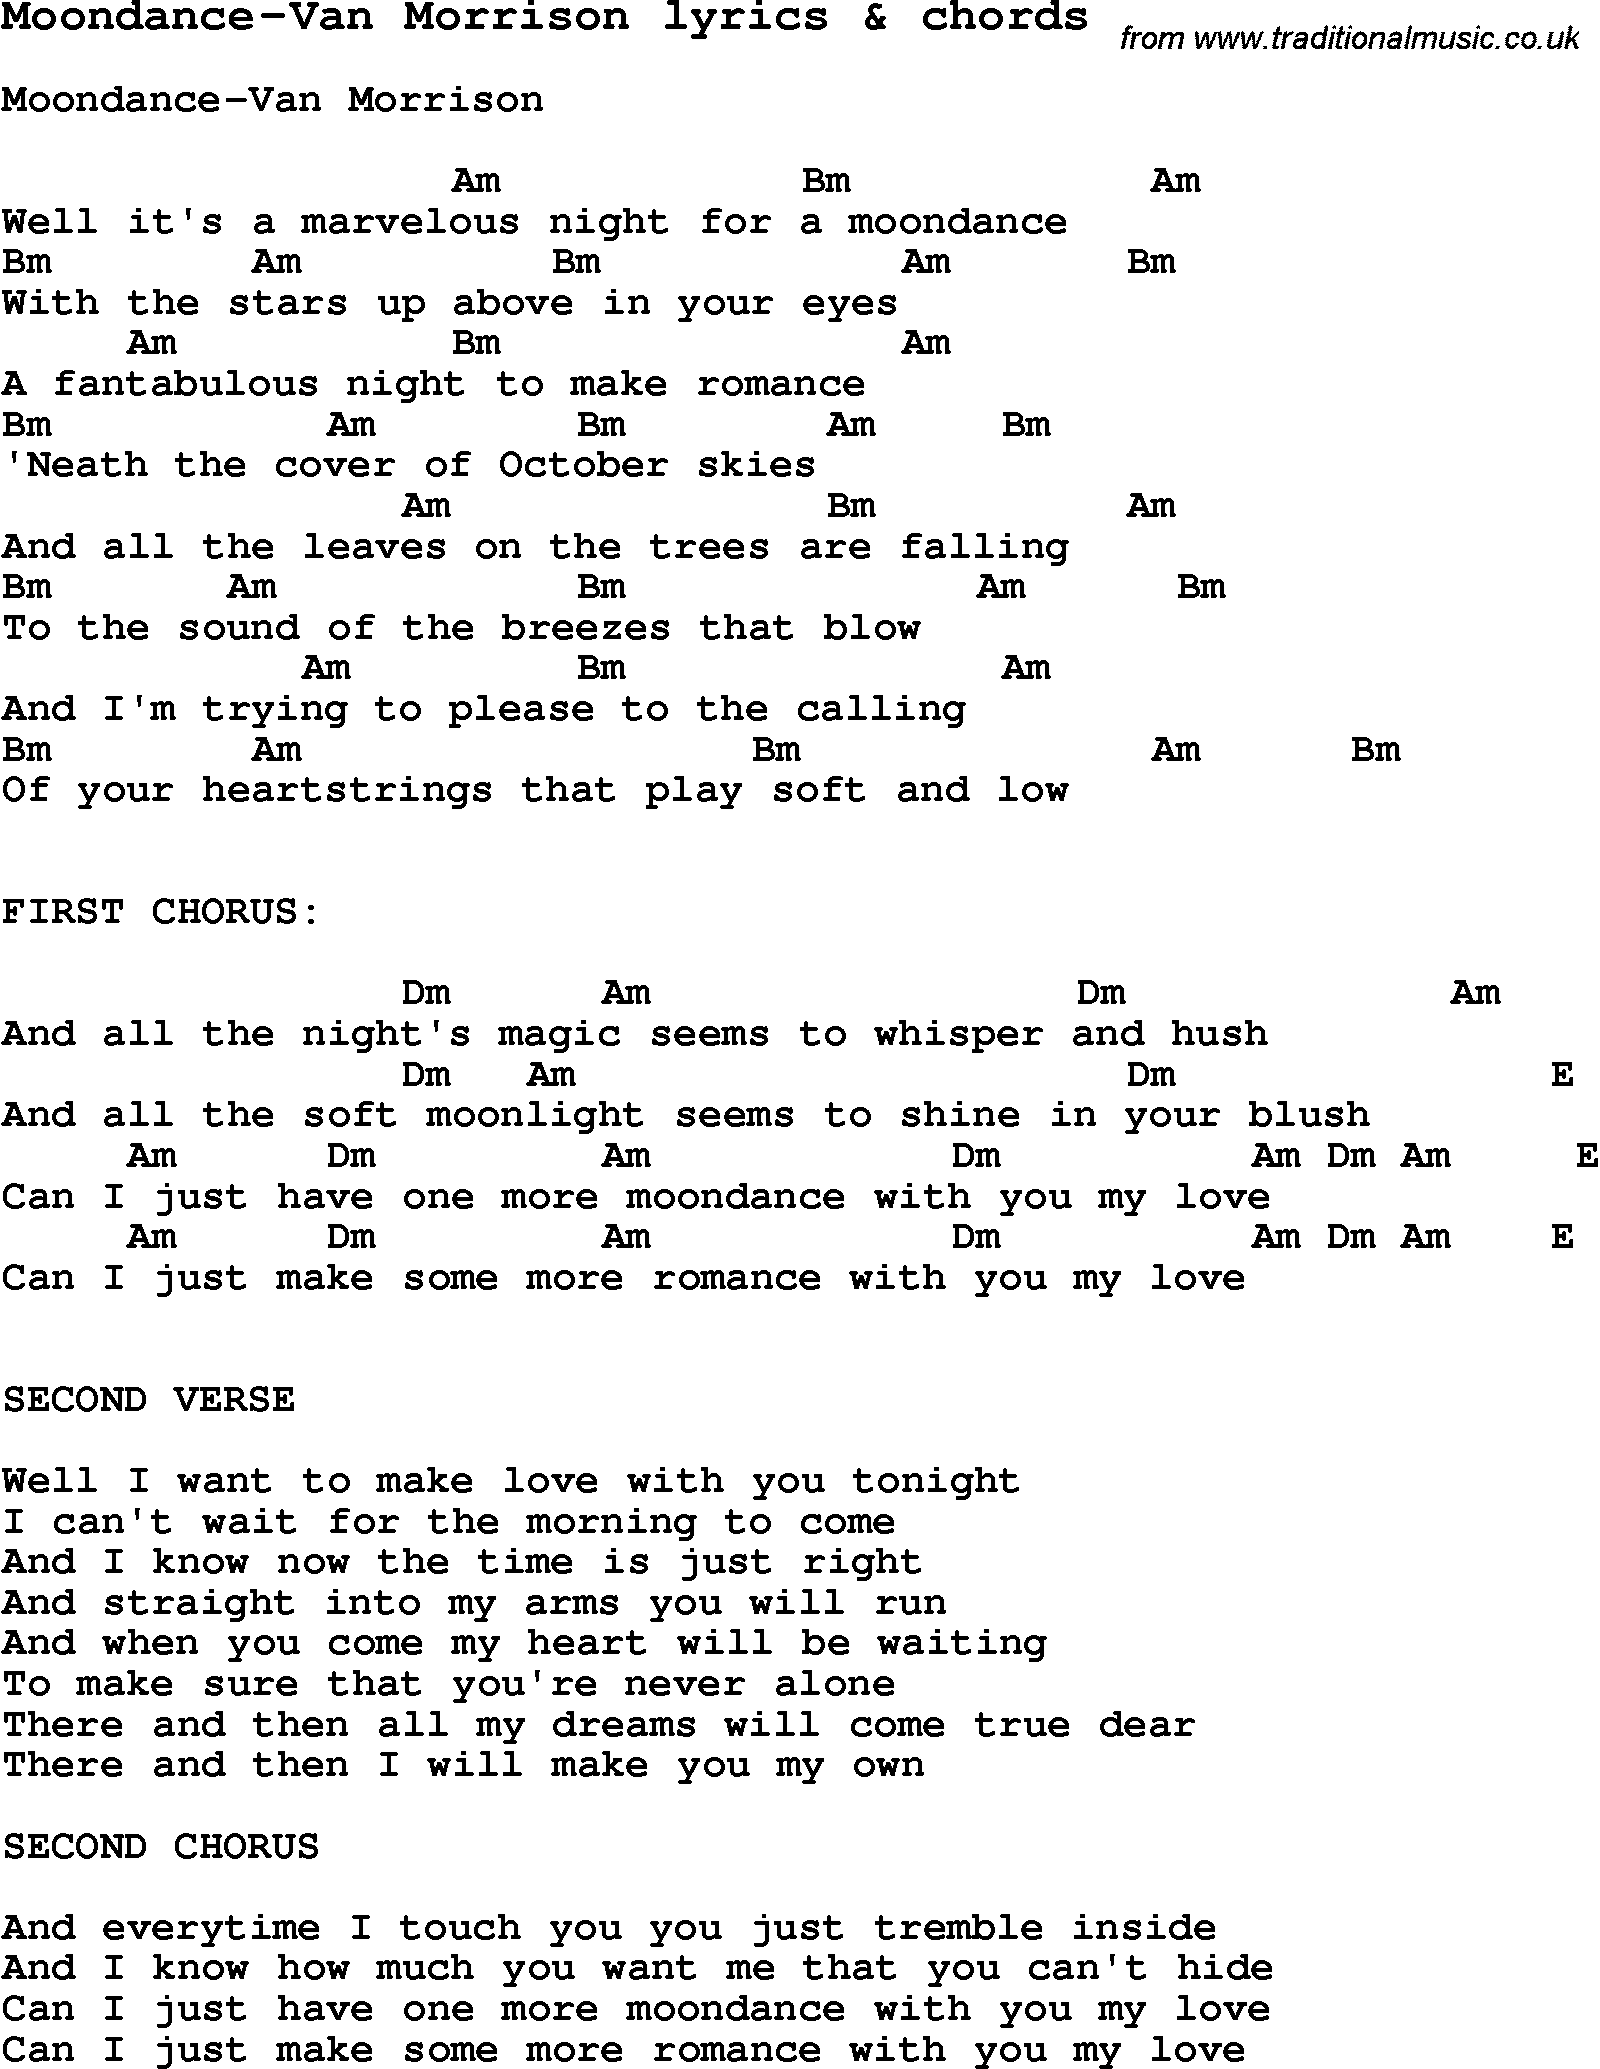 Love Song Lyrics for: Moondance-Van Morrison with chords for Ukulele, Guitar Banjo etc.